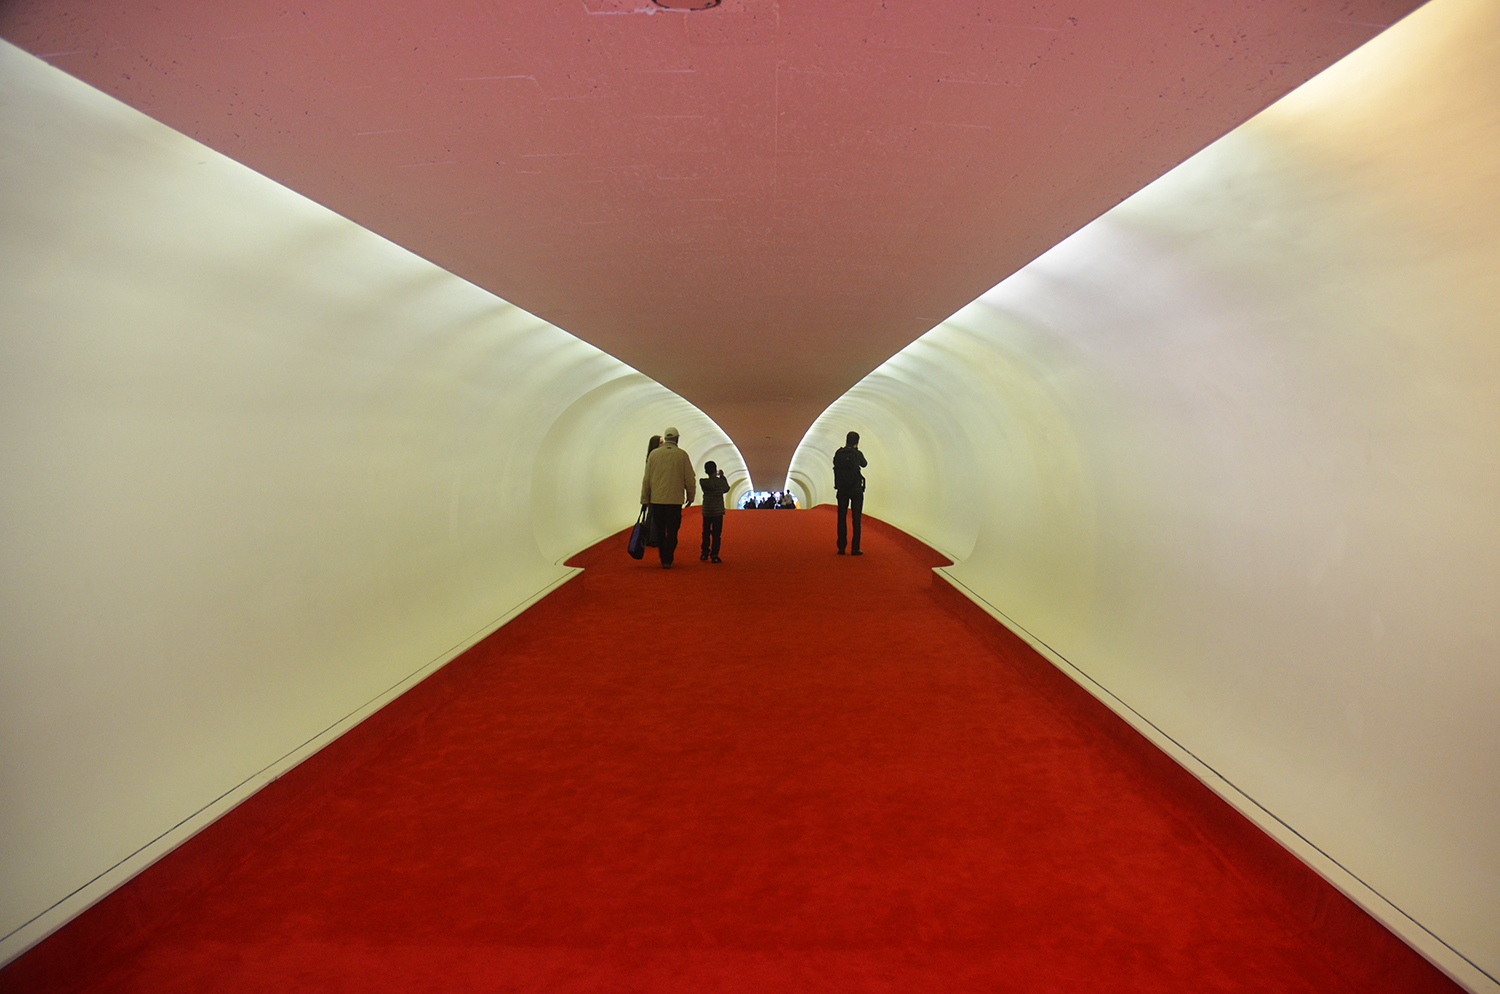 Flight tube at the TWA Flight Center as seen in October 2014. Photograph by Evan Bindelglass.